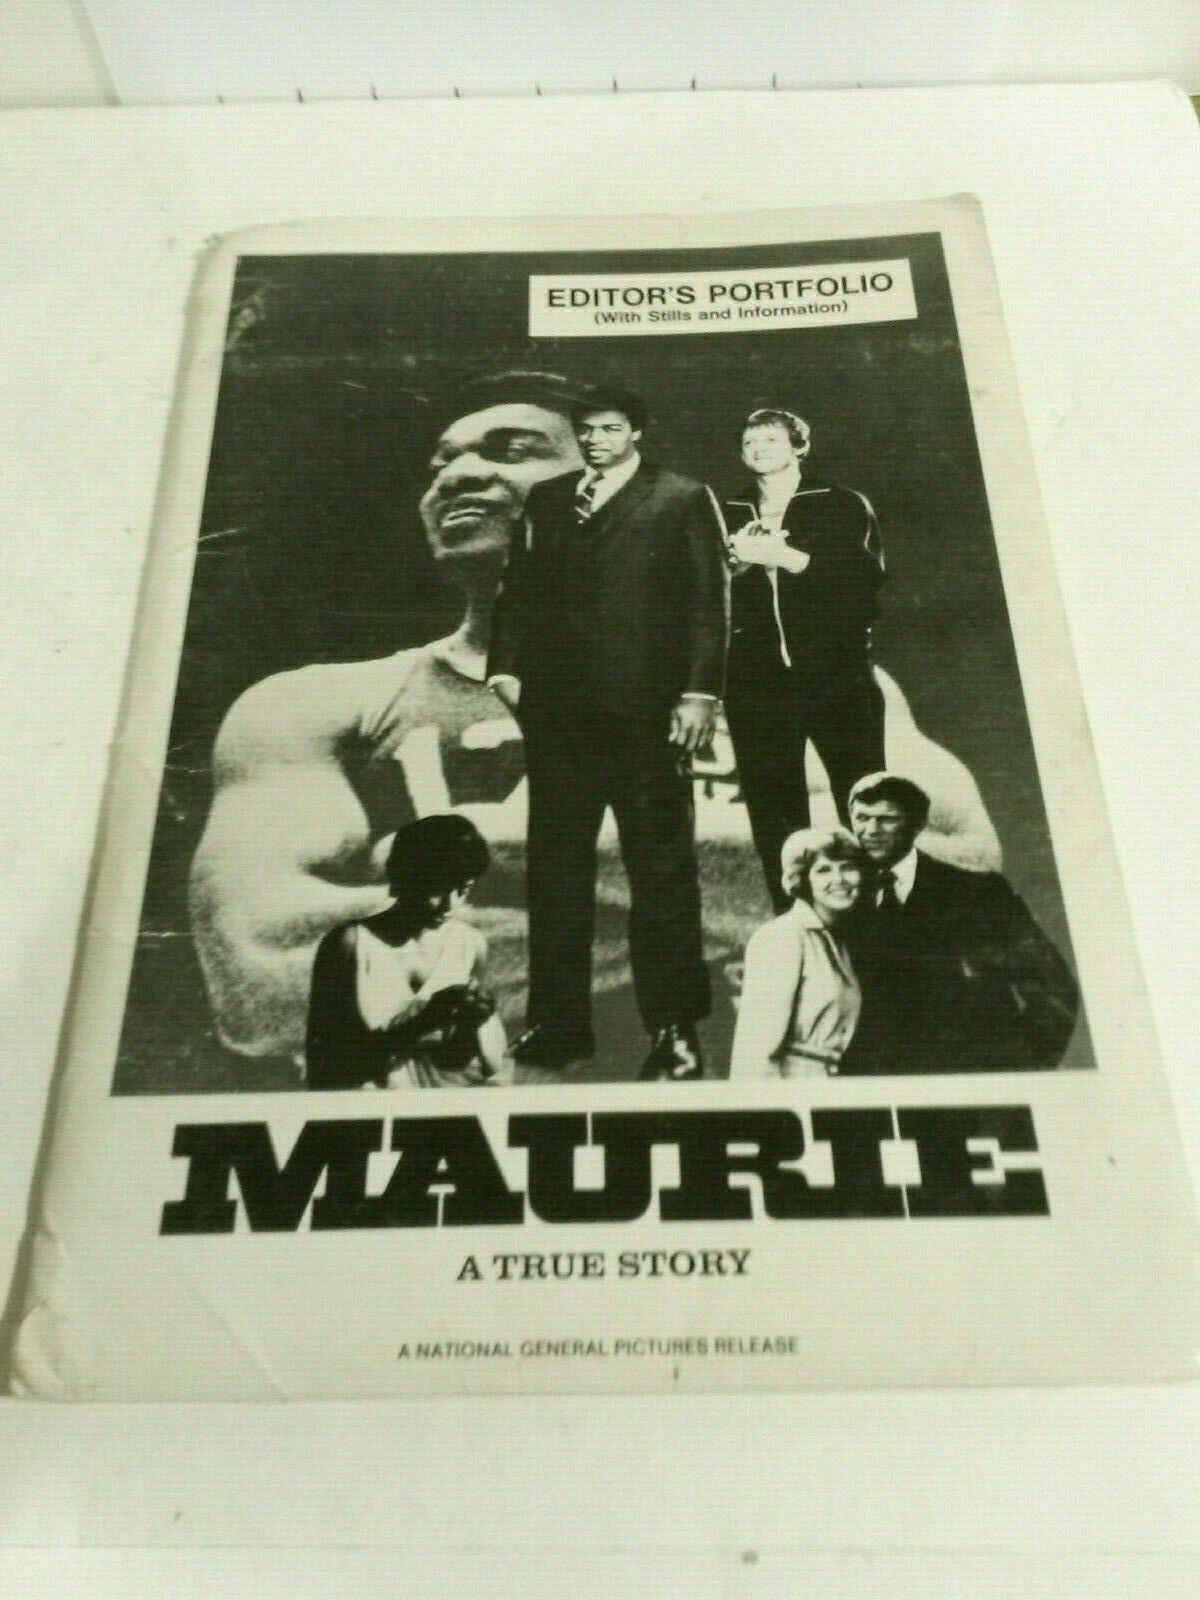 Maurie NBA Twyman Stokes Bernard Casey movie press information kit 1973 